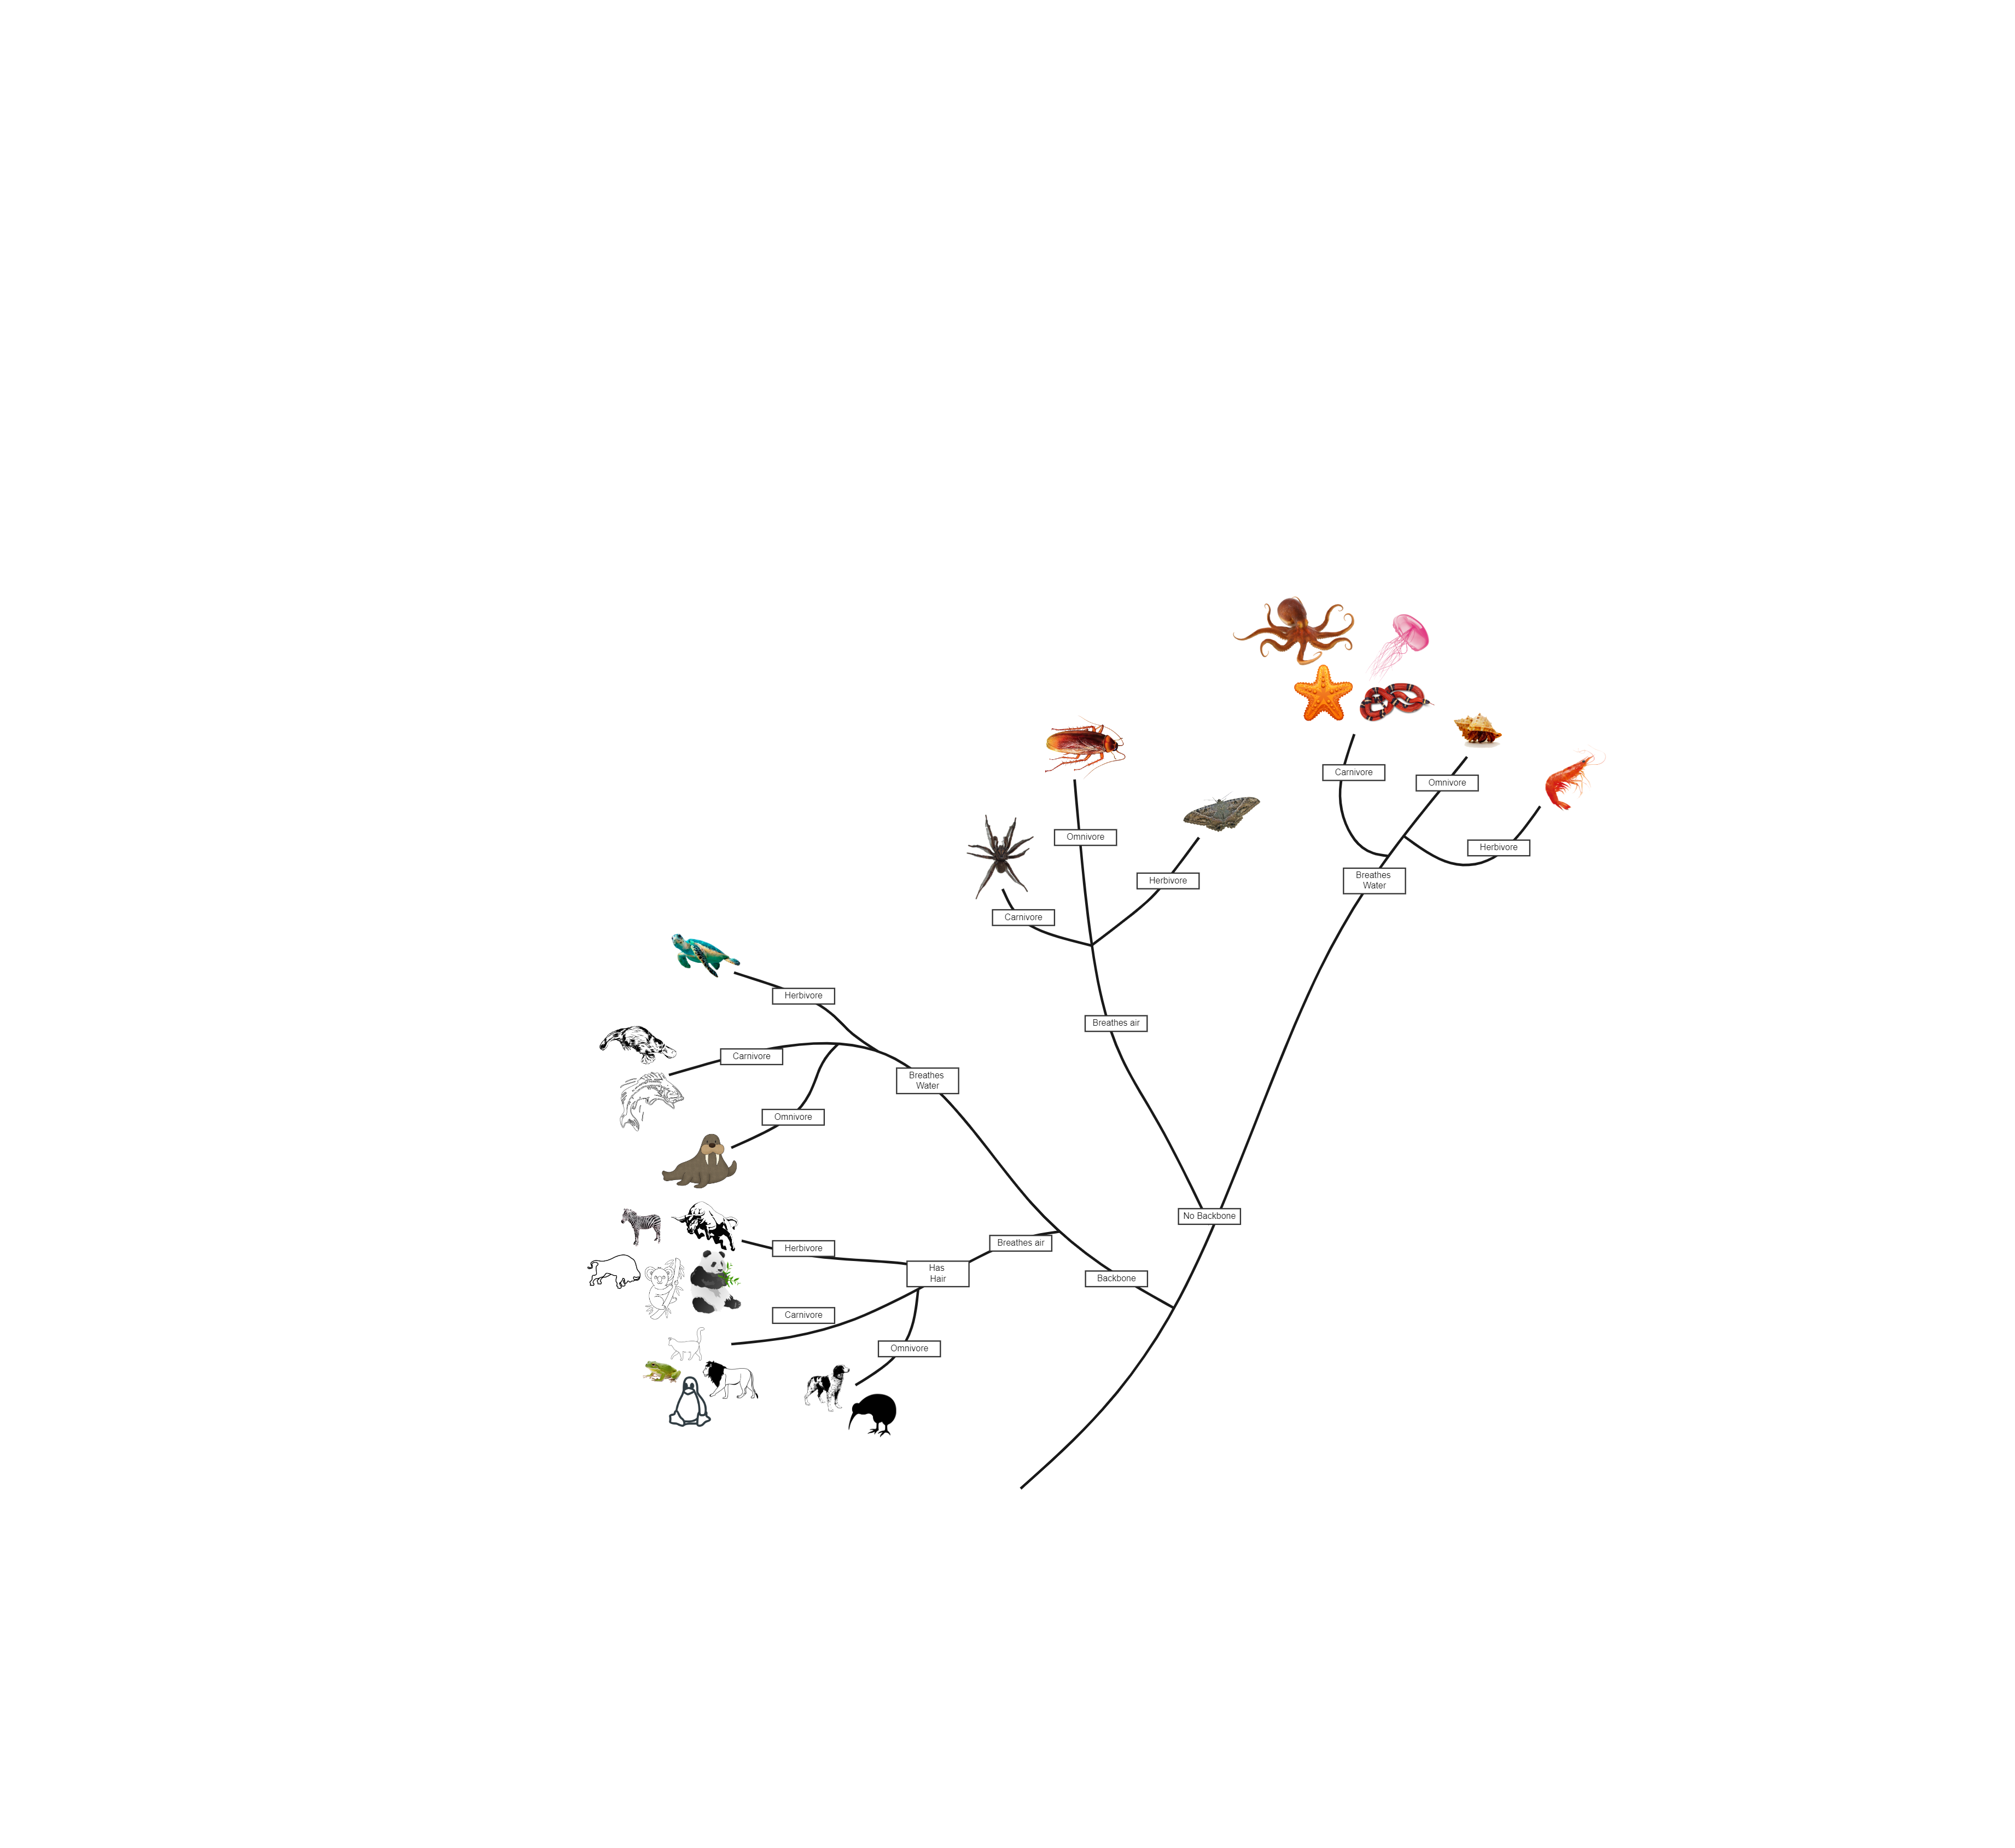 Biology Phylogenetic Tree